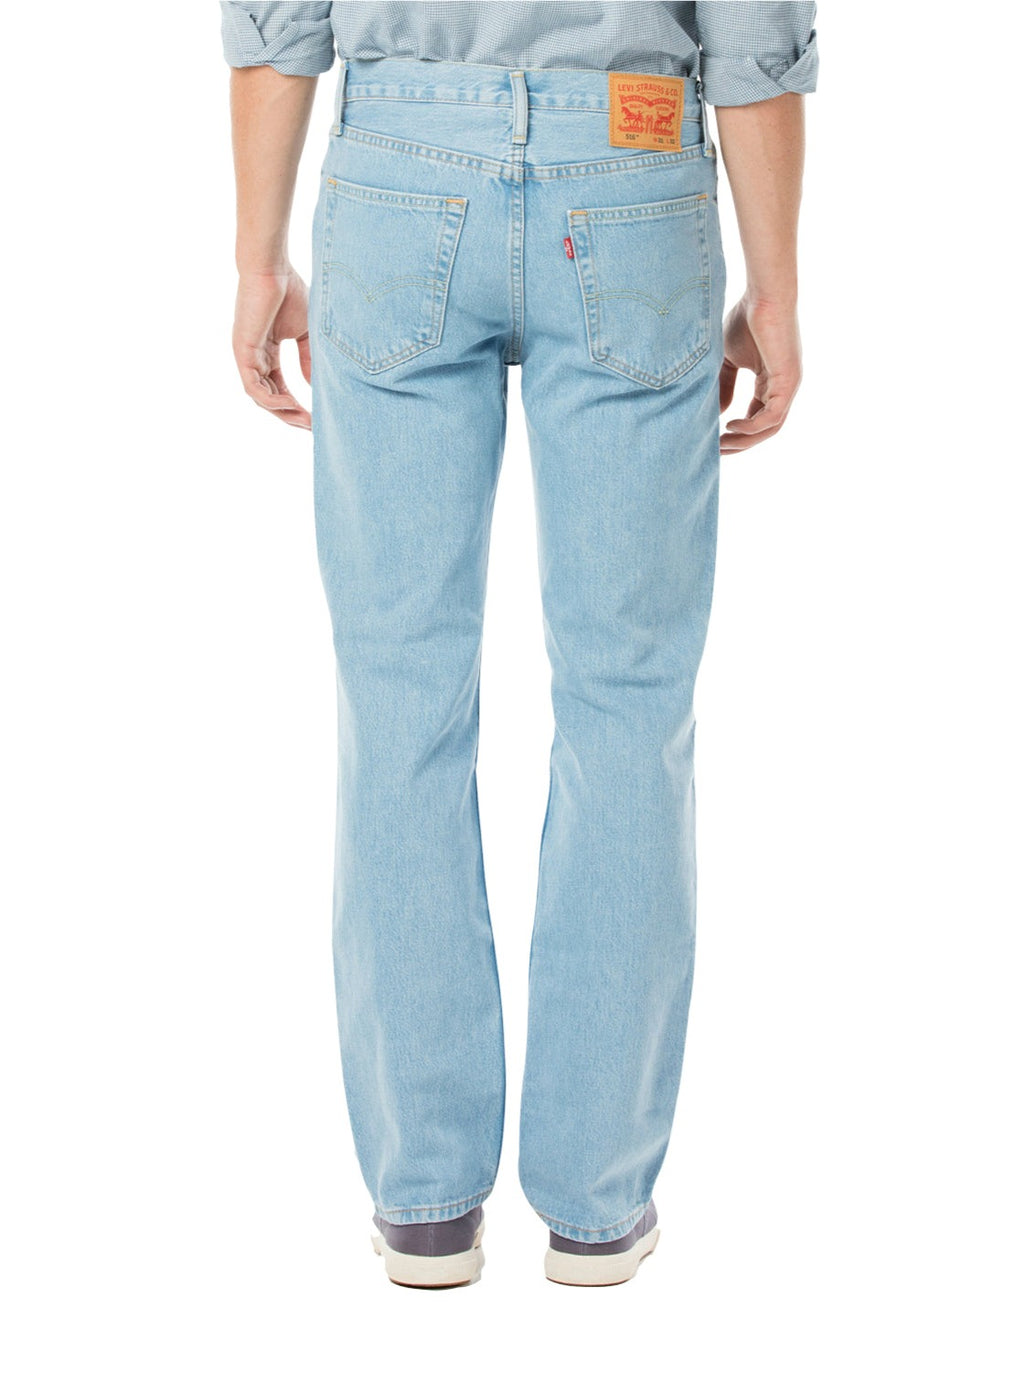 Levi's 516 Straight – 88 Jeans